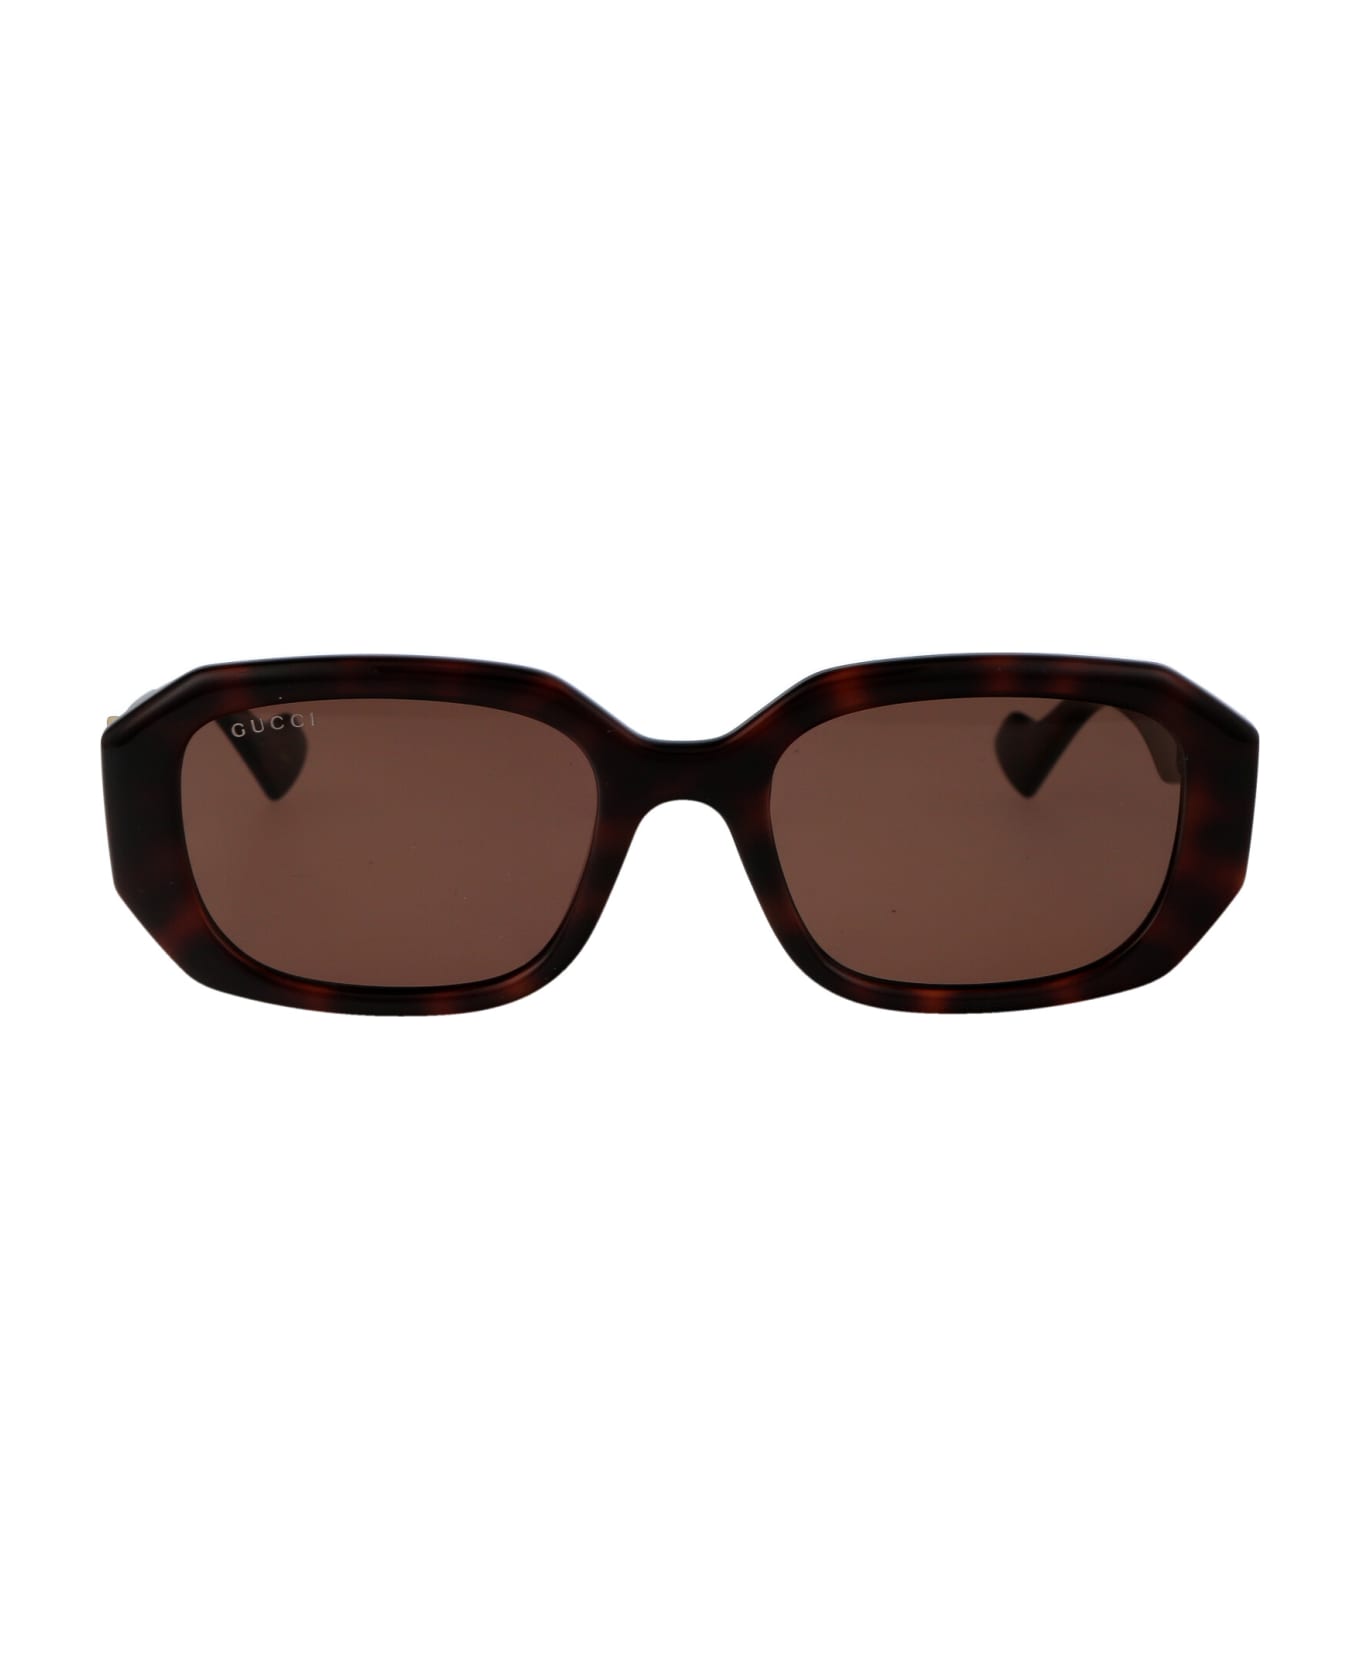 Gucci Eyewear Gg1535s Sunglasses - 002 HAVANA HAVANA BROWN